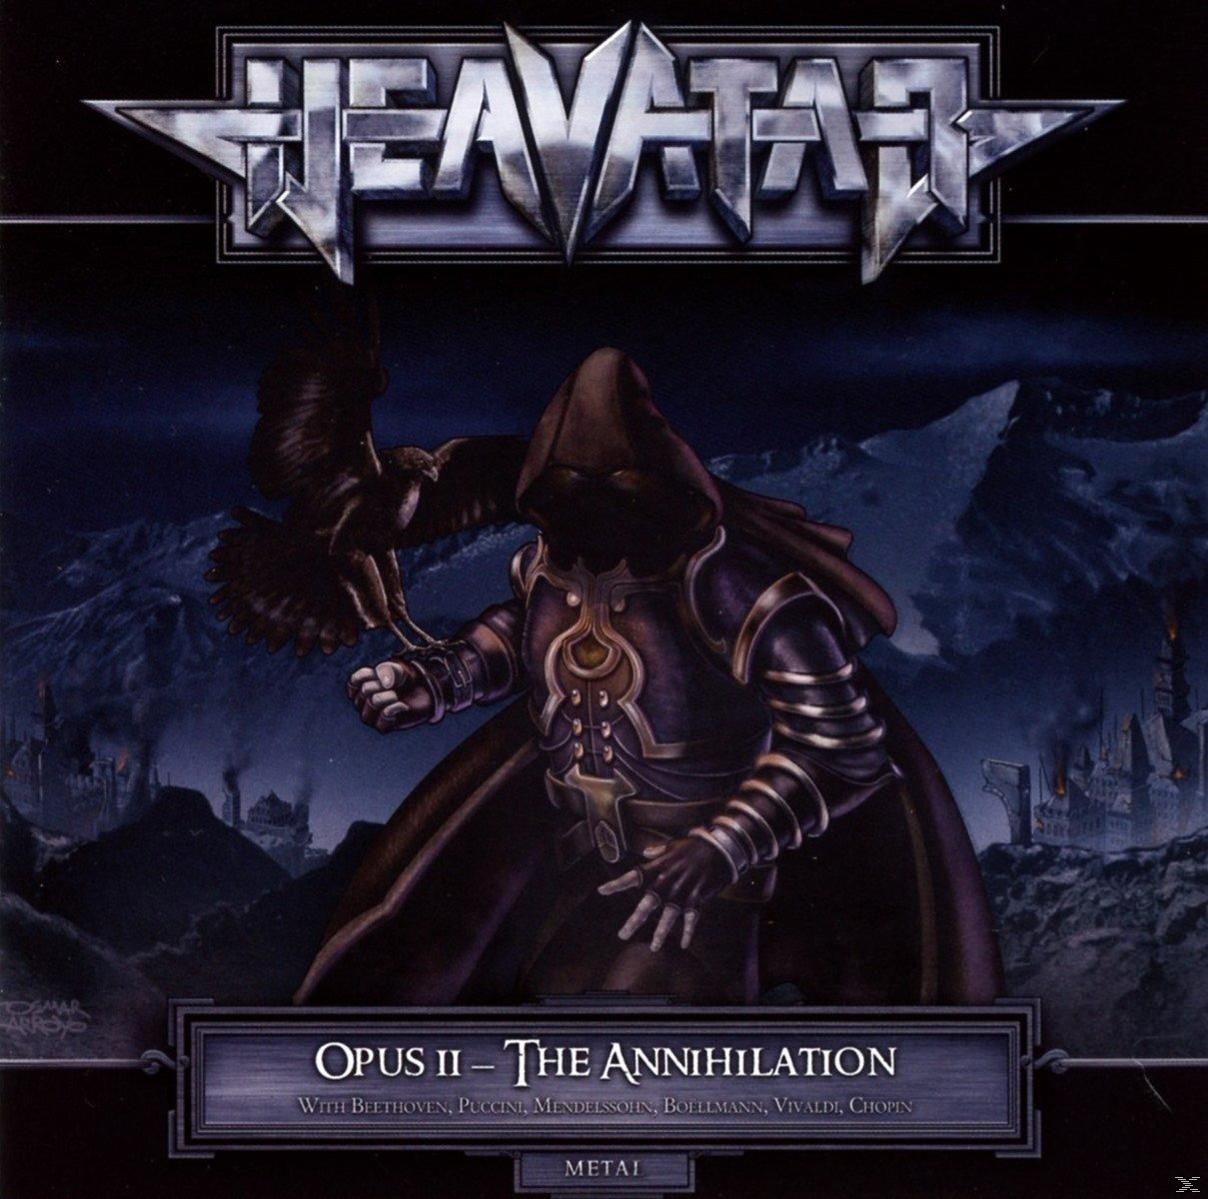 - Heavatar - II-The (CD) Opus Annihilation